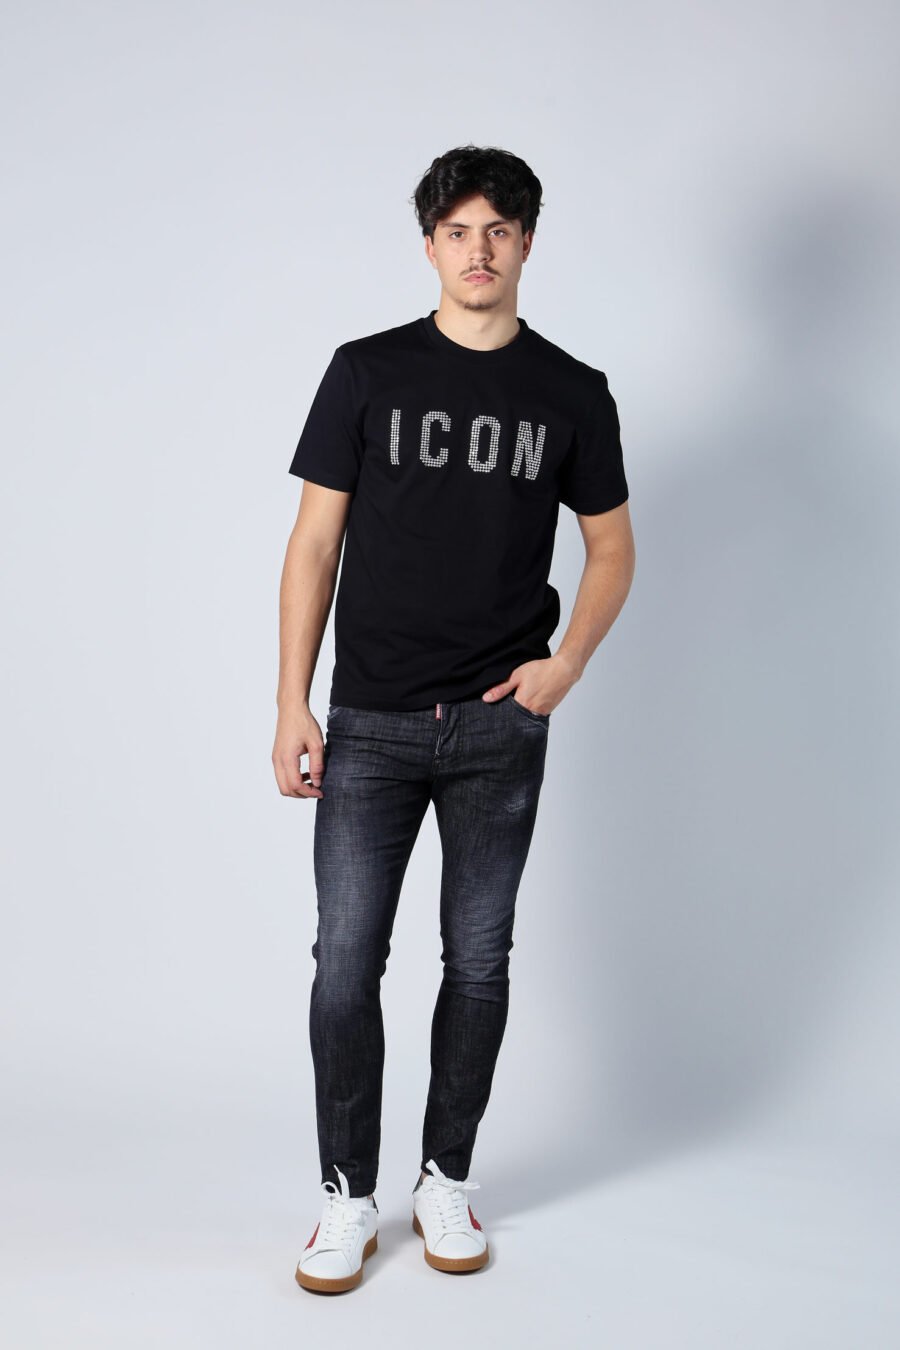 Camiseta negra con logo "icon" blanco de cuadros - Untitled Catalog 05678